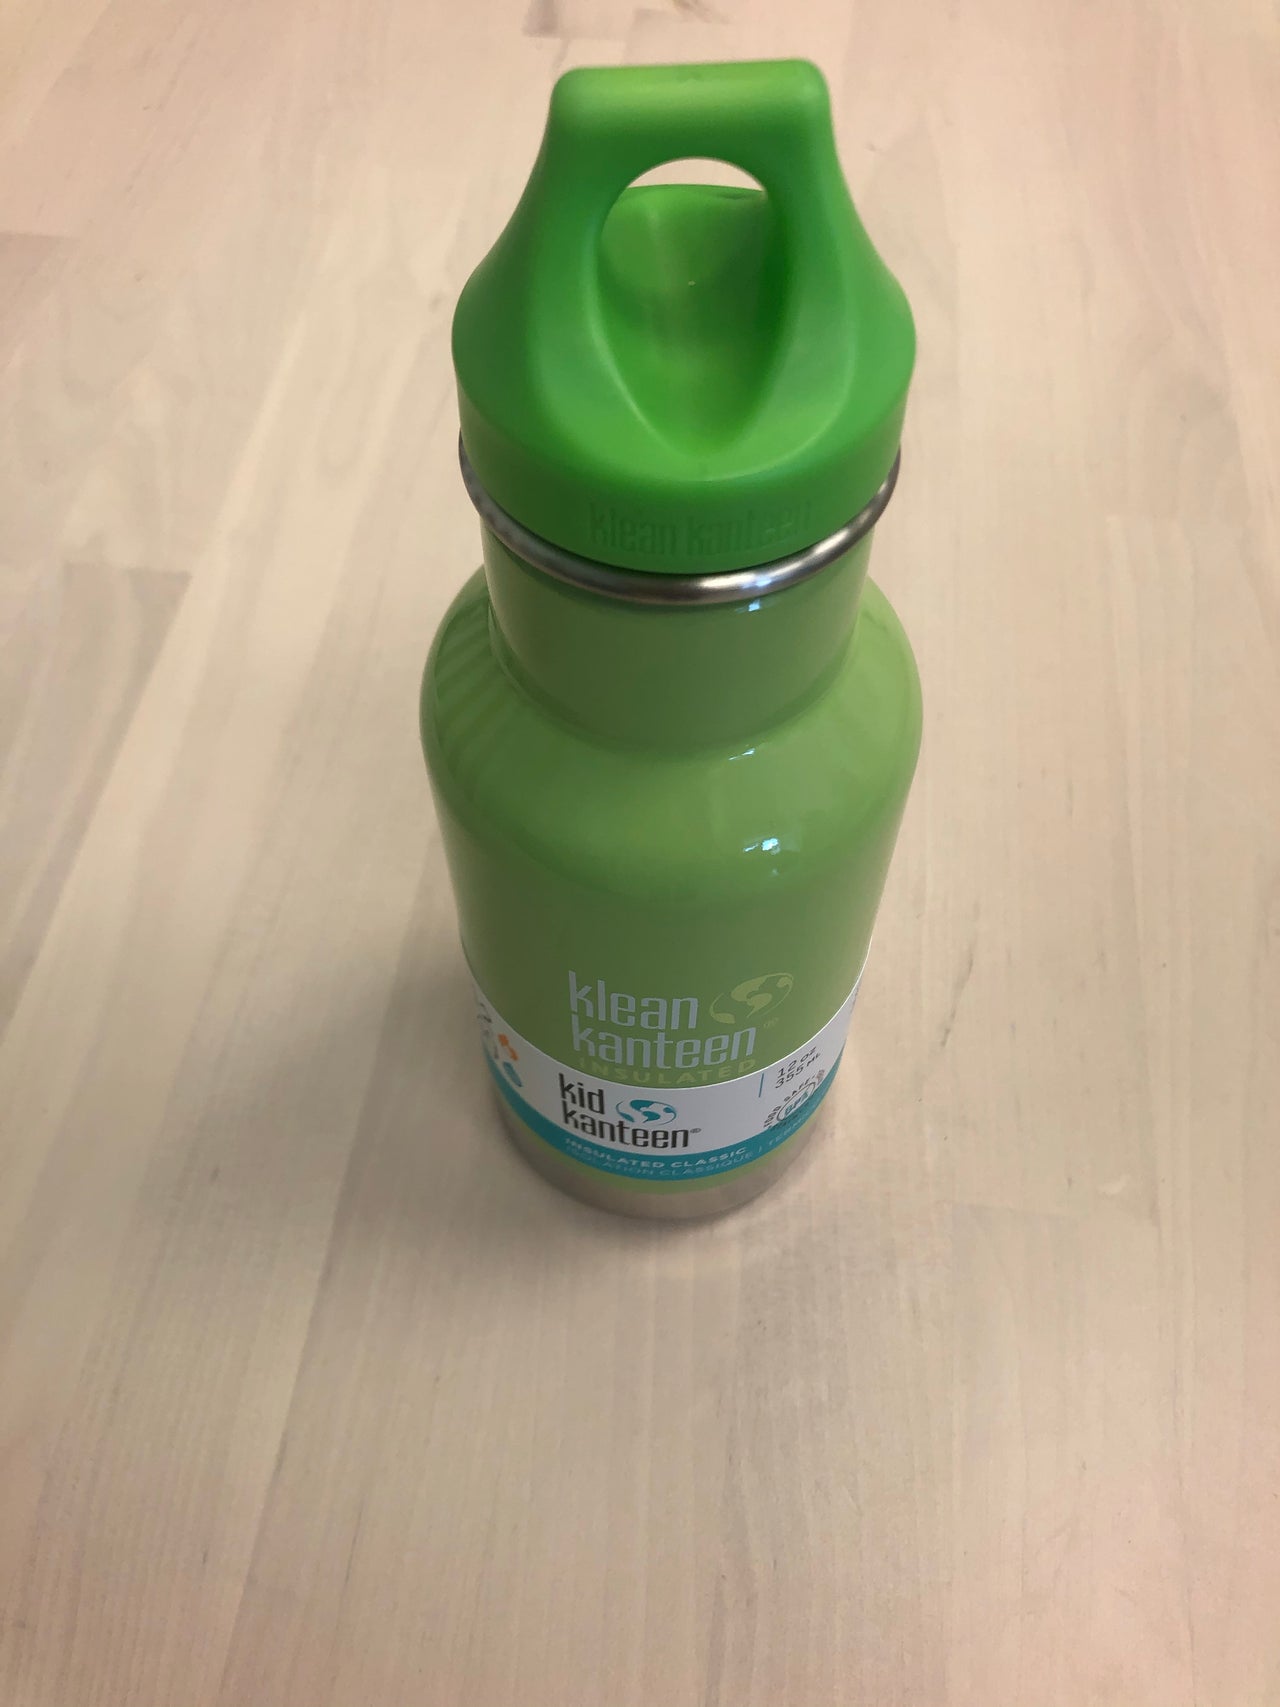 Kid Kanteen Insulated Water Bottle